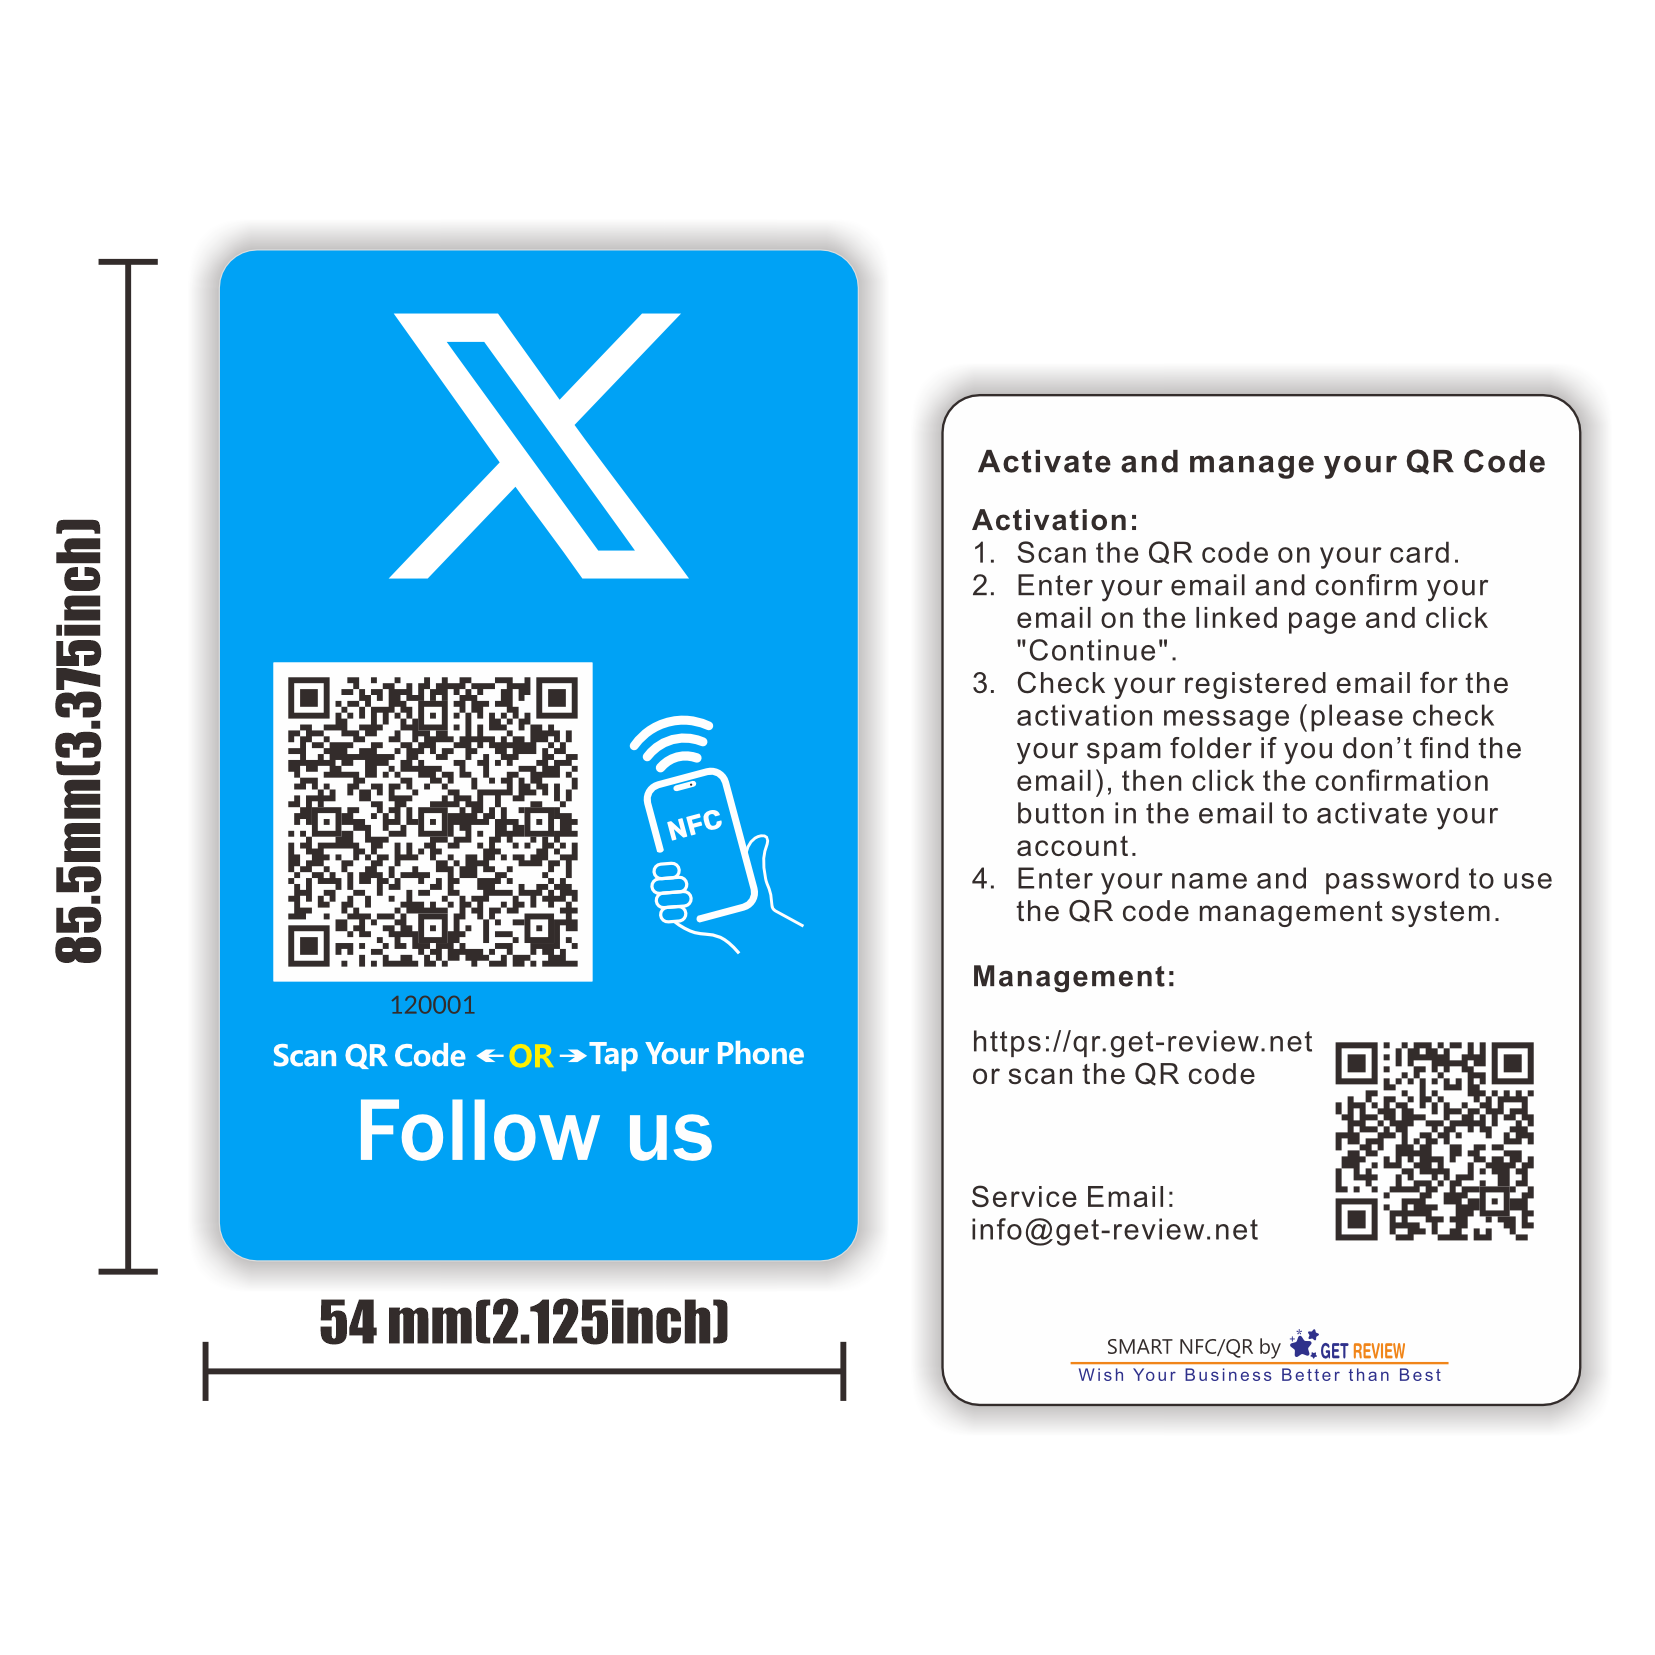 Contactless Sharing Smart NFC 'Follow Us On X' - X (Twitter) Touchless Card Reusable QR Code